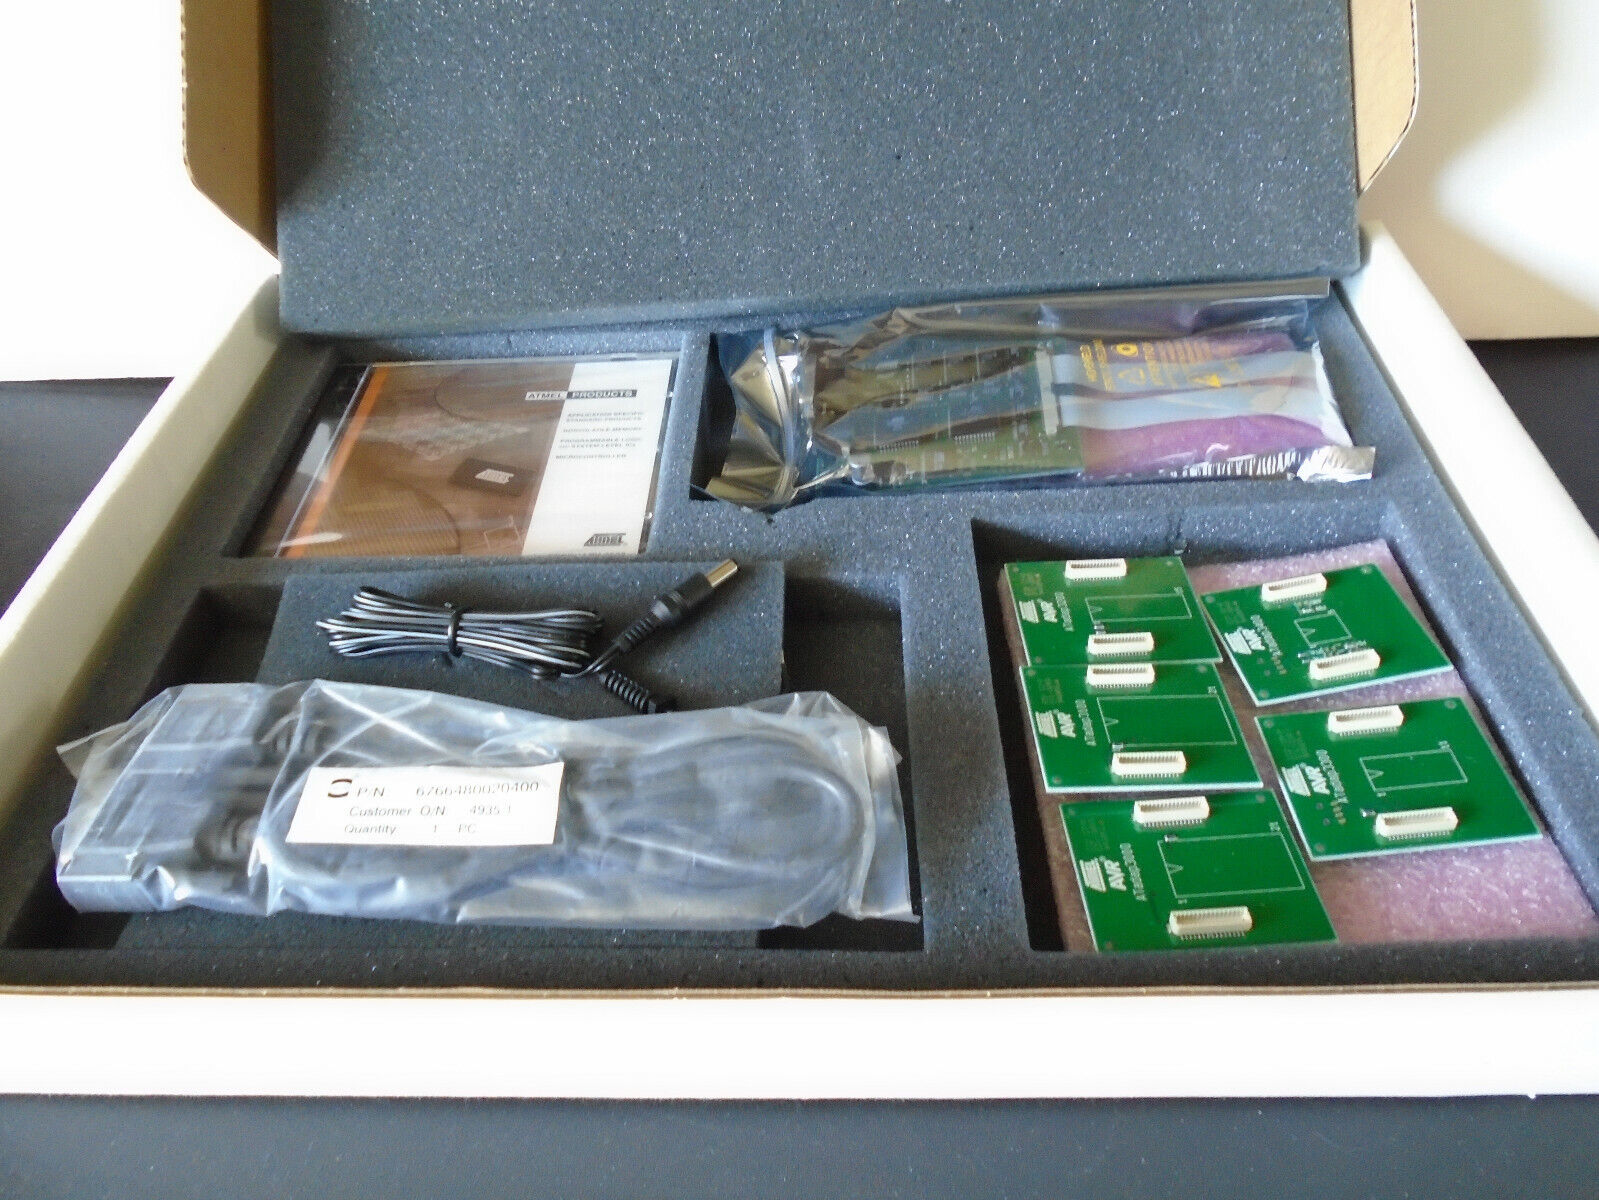 Ice 200 In-circuit Emulator For Software Development - Avr Flash Microcontroller